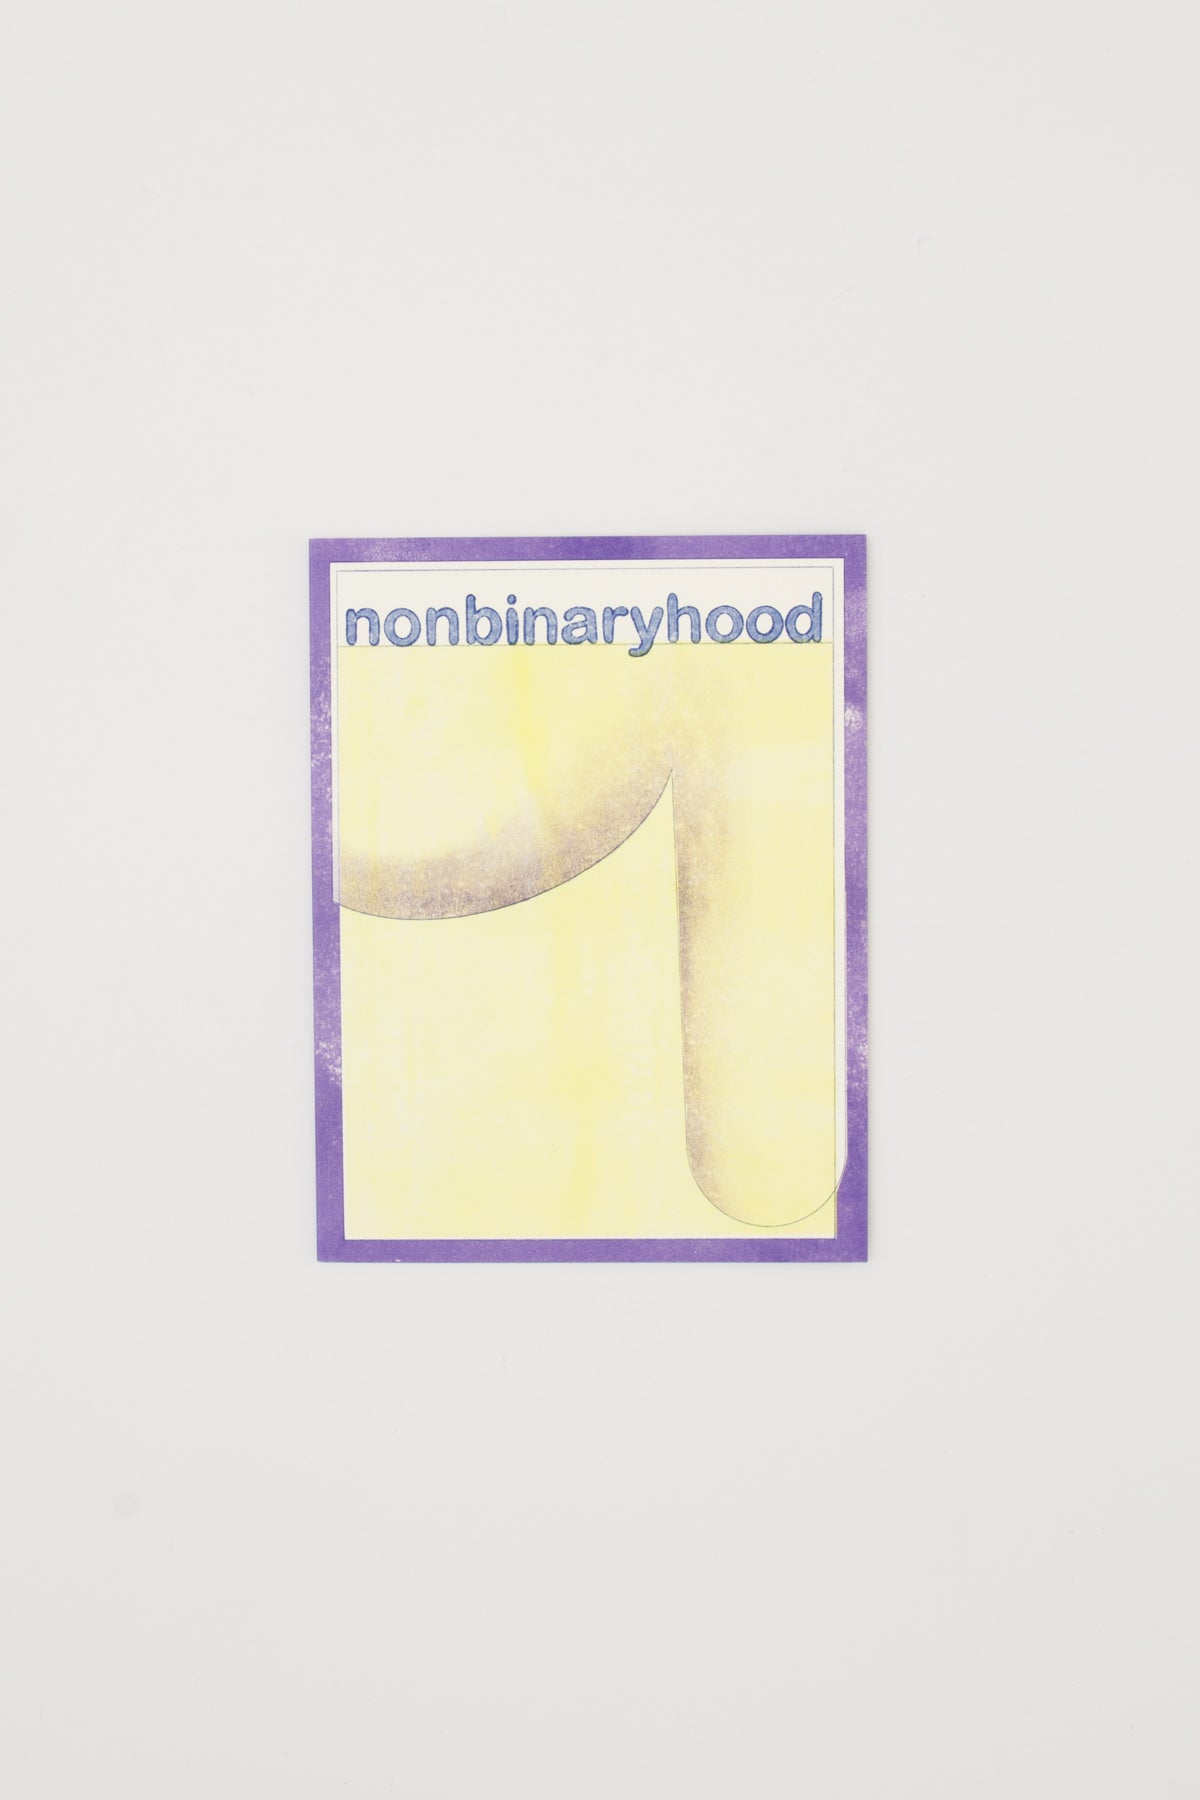 Nonbinaryhood - Aki Hassan